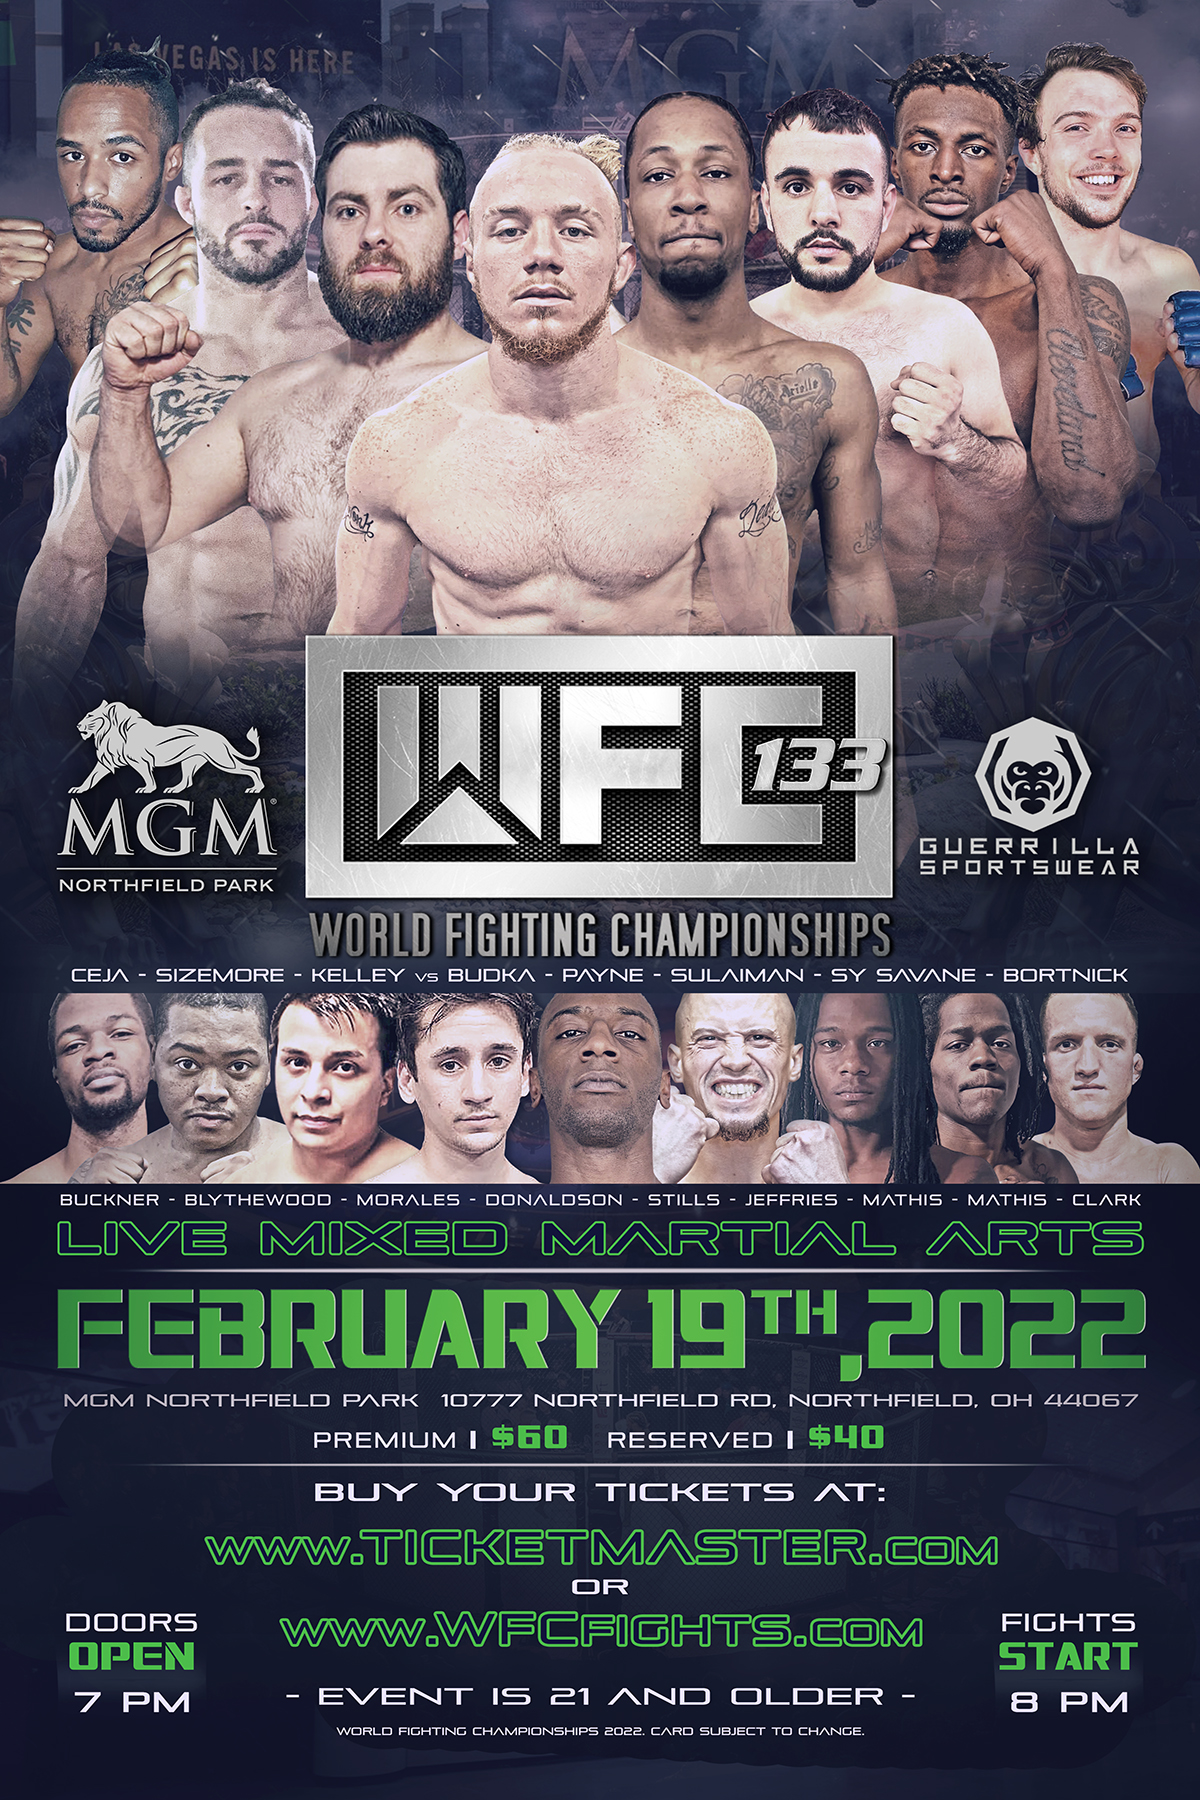 WFC 133 LIVE MMA February 19th,2022